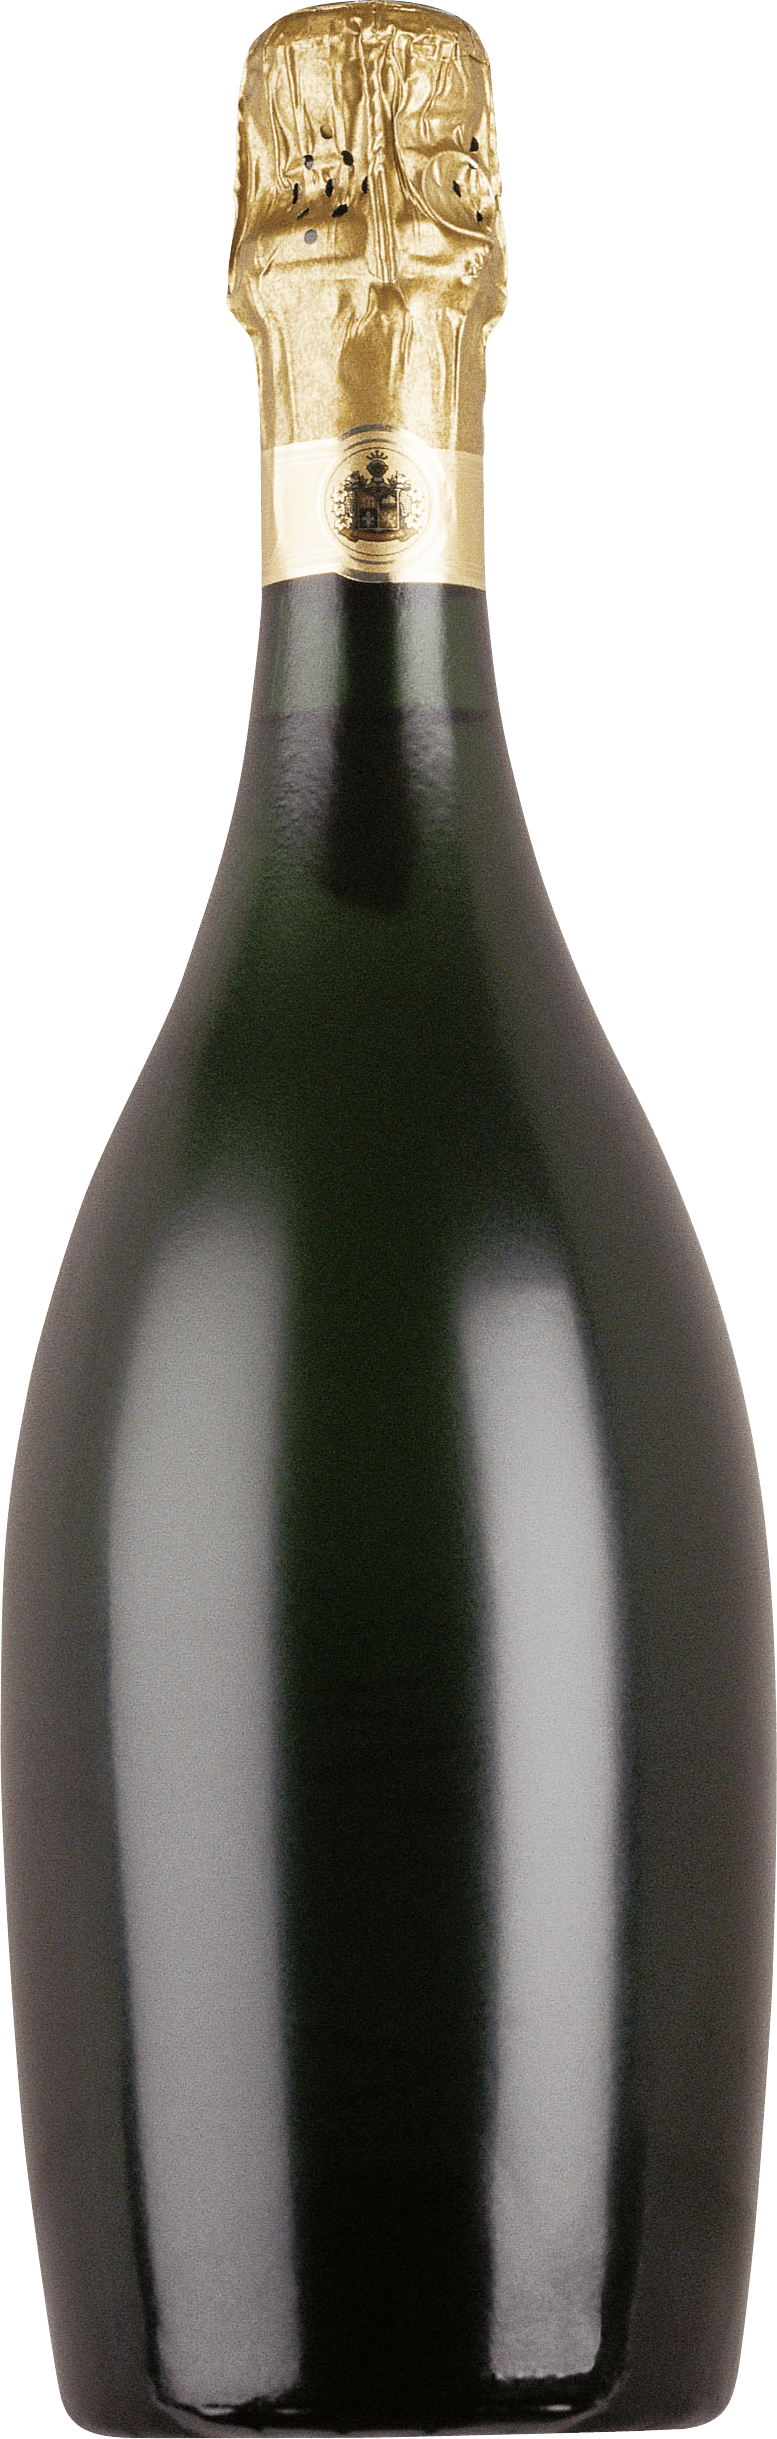 Champagne Bottle Png Image PNG Image